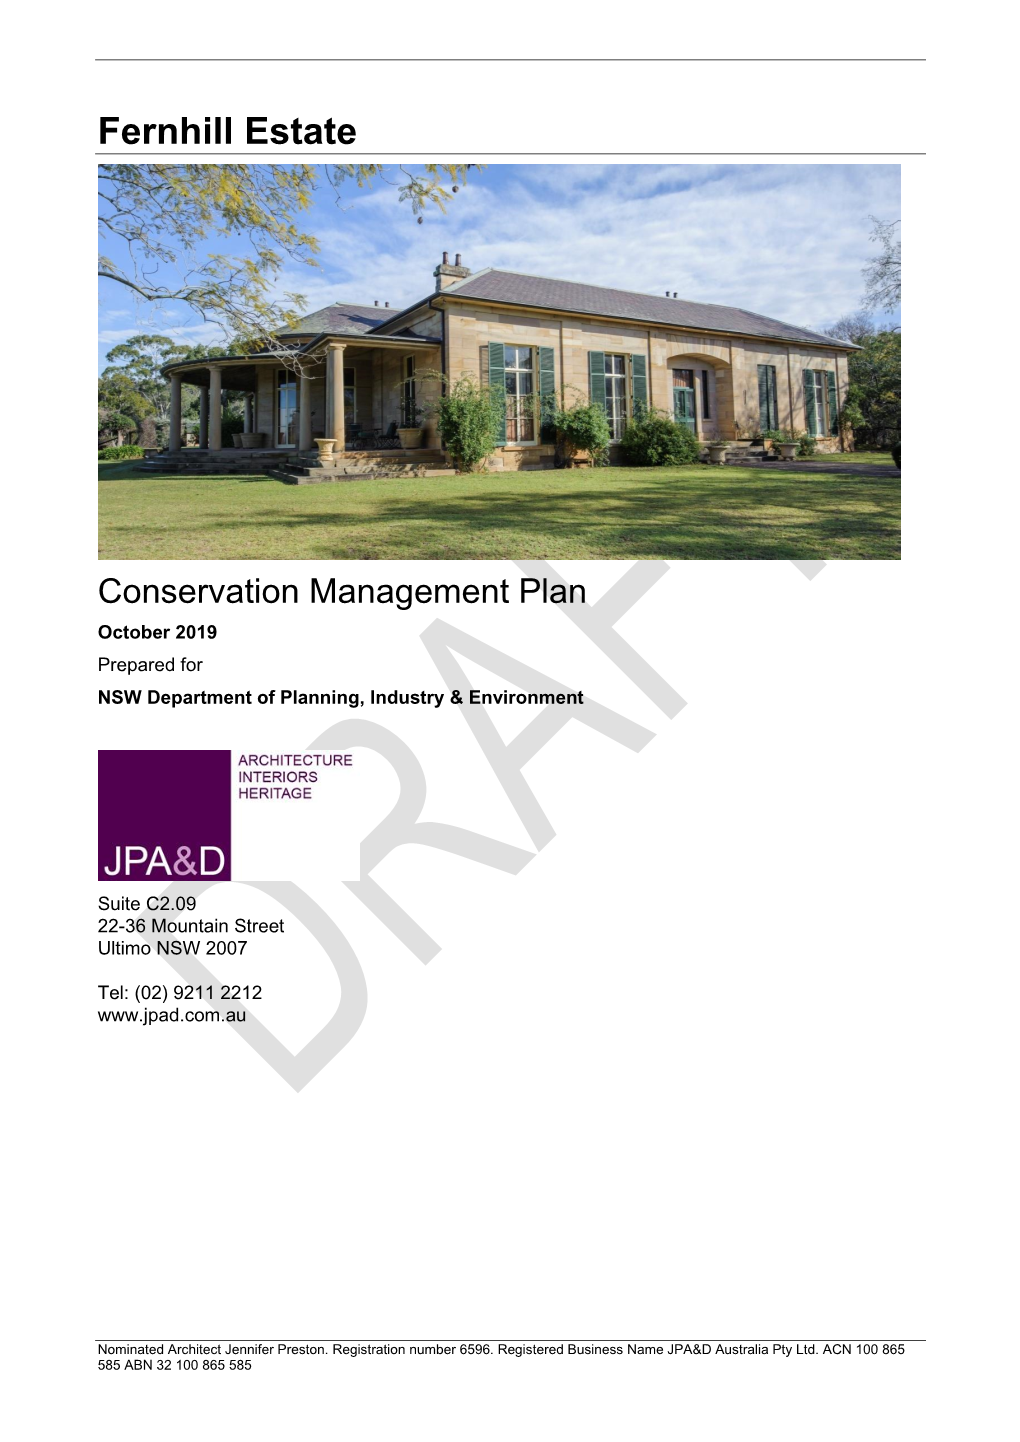 Fernhill Estate Conservation Management Plan Part 1 of 3